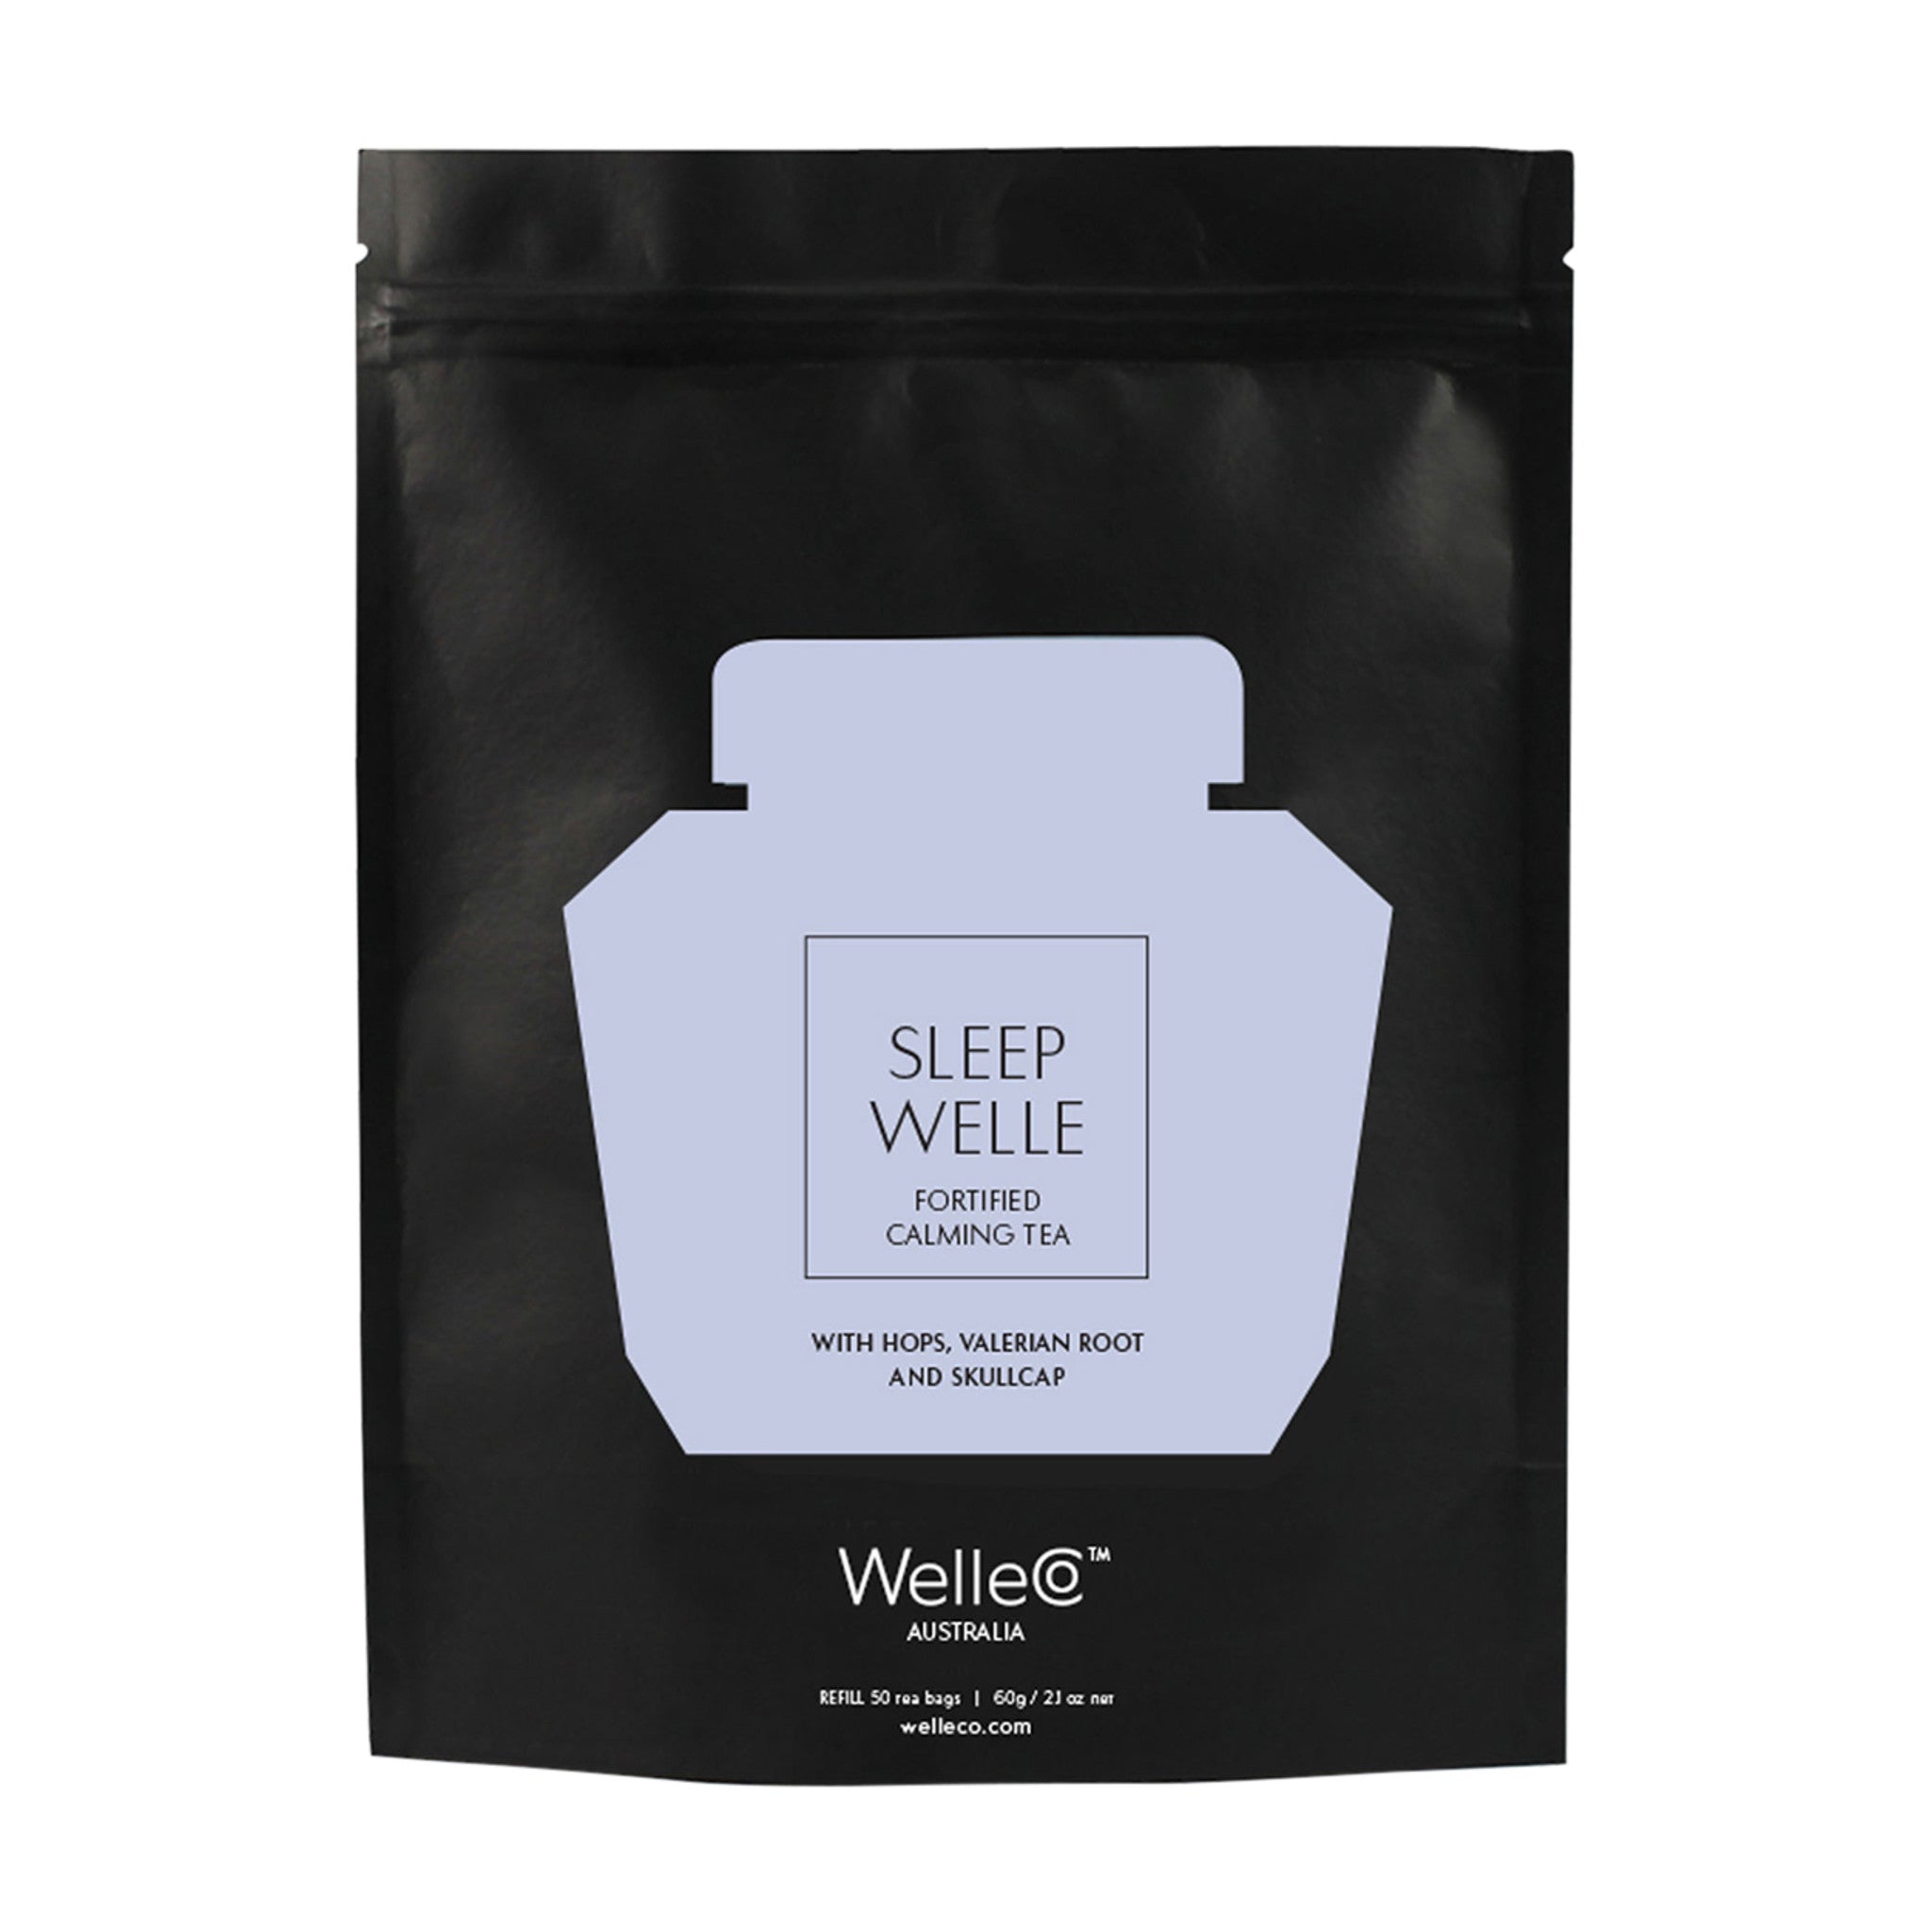 WelleCo Sleep Welle Calming Tea Refill main image.